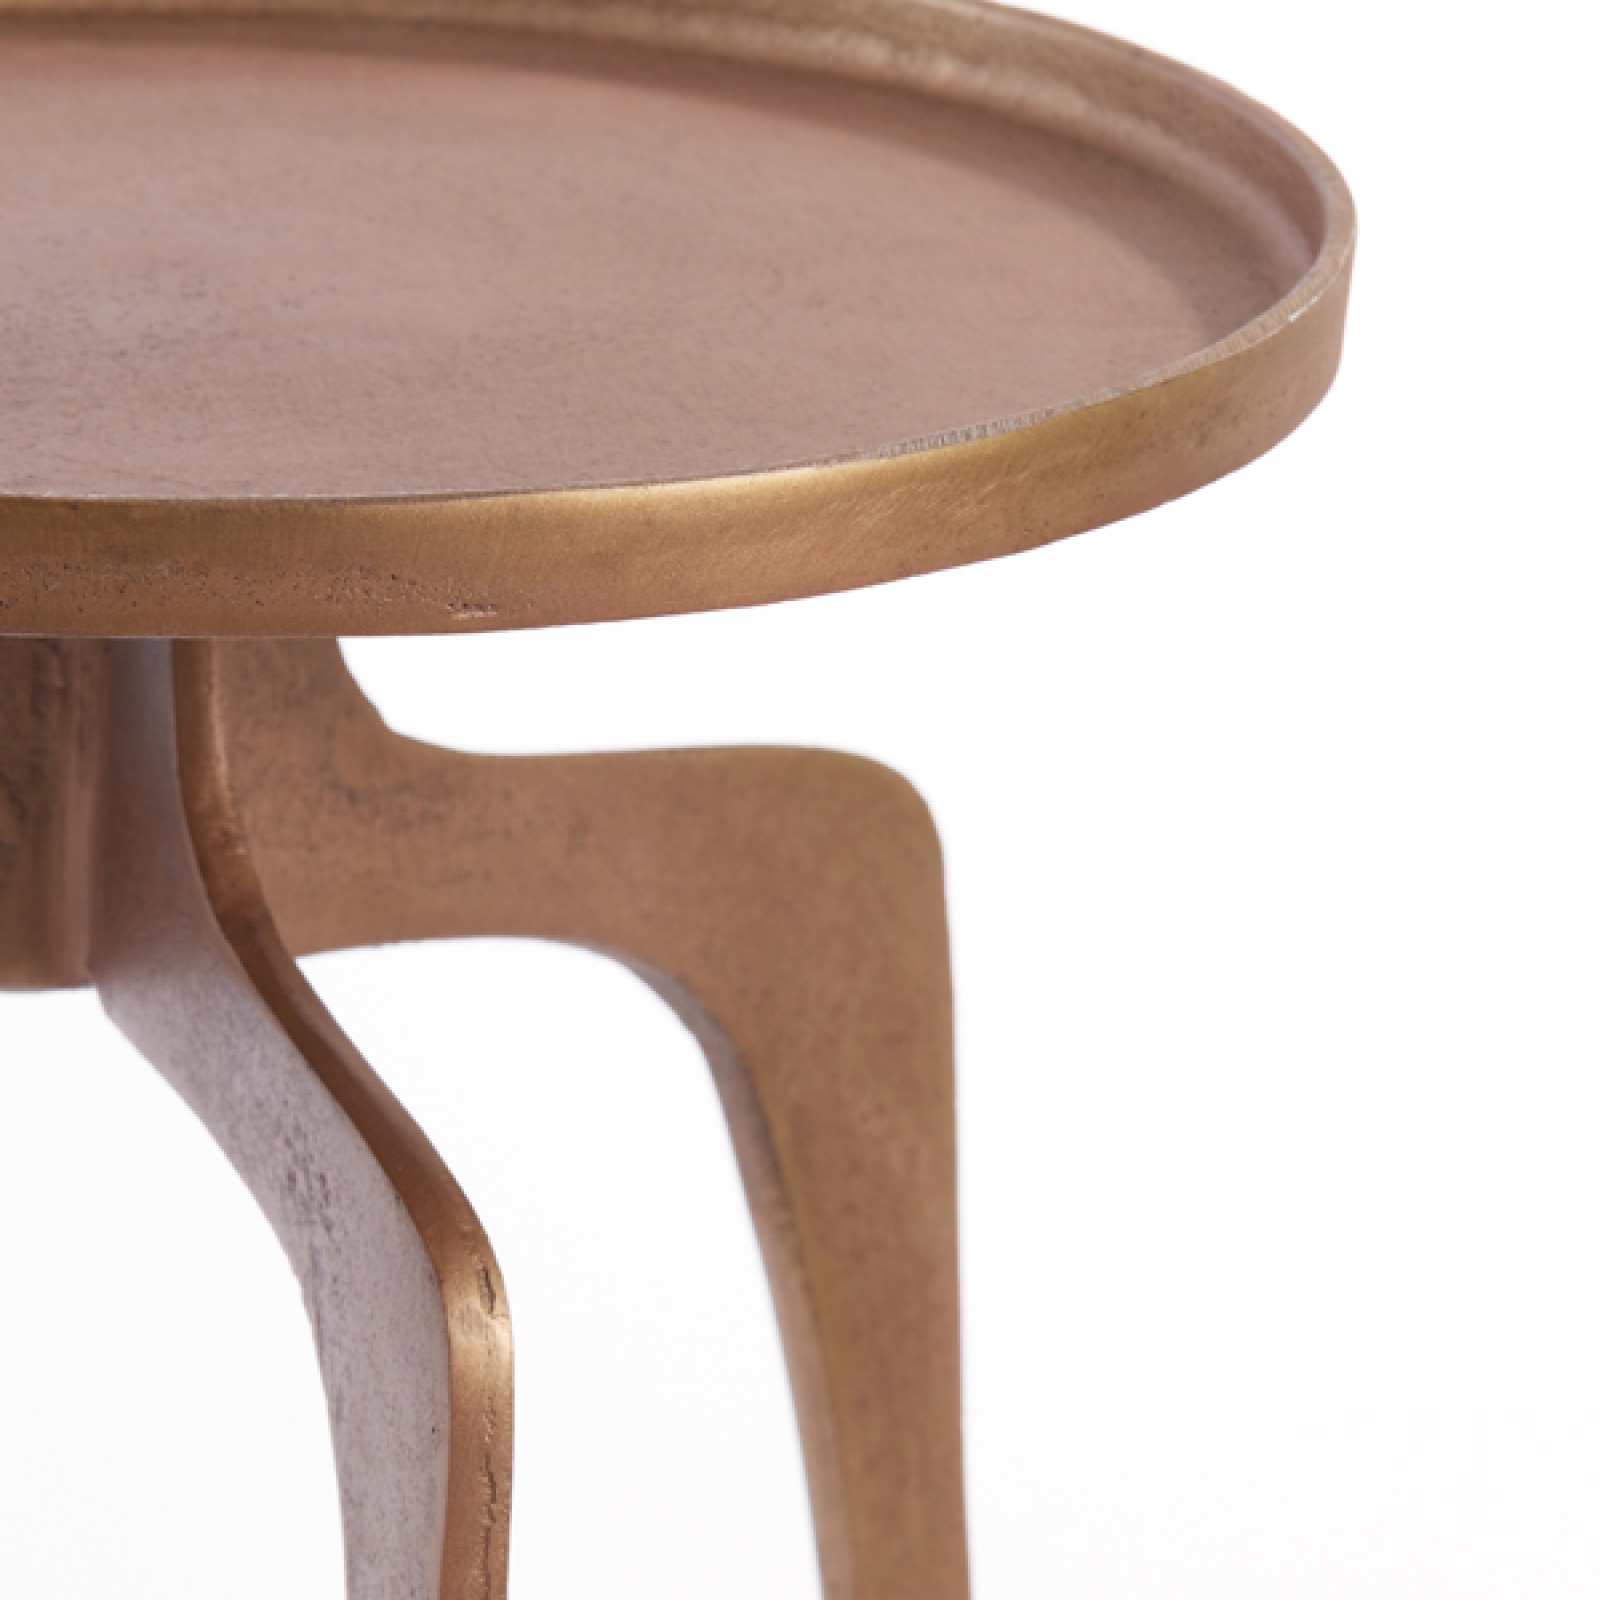 Pano bronze side table set